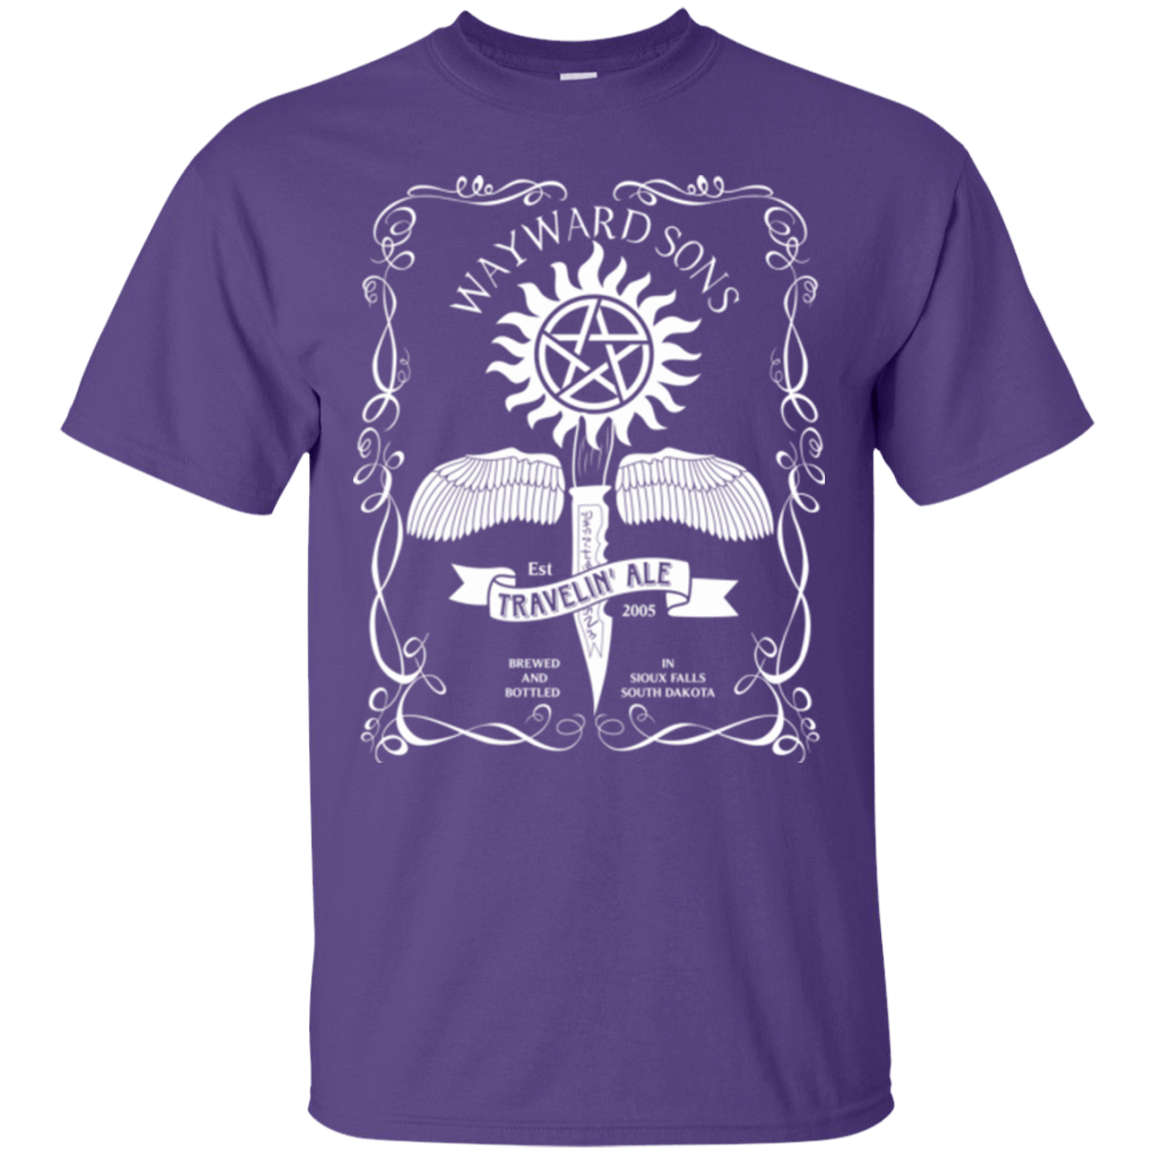 T-Shirts Purple / Small Supernatural 3 T-Shirt